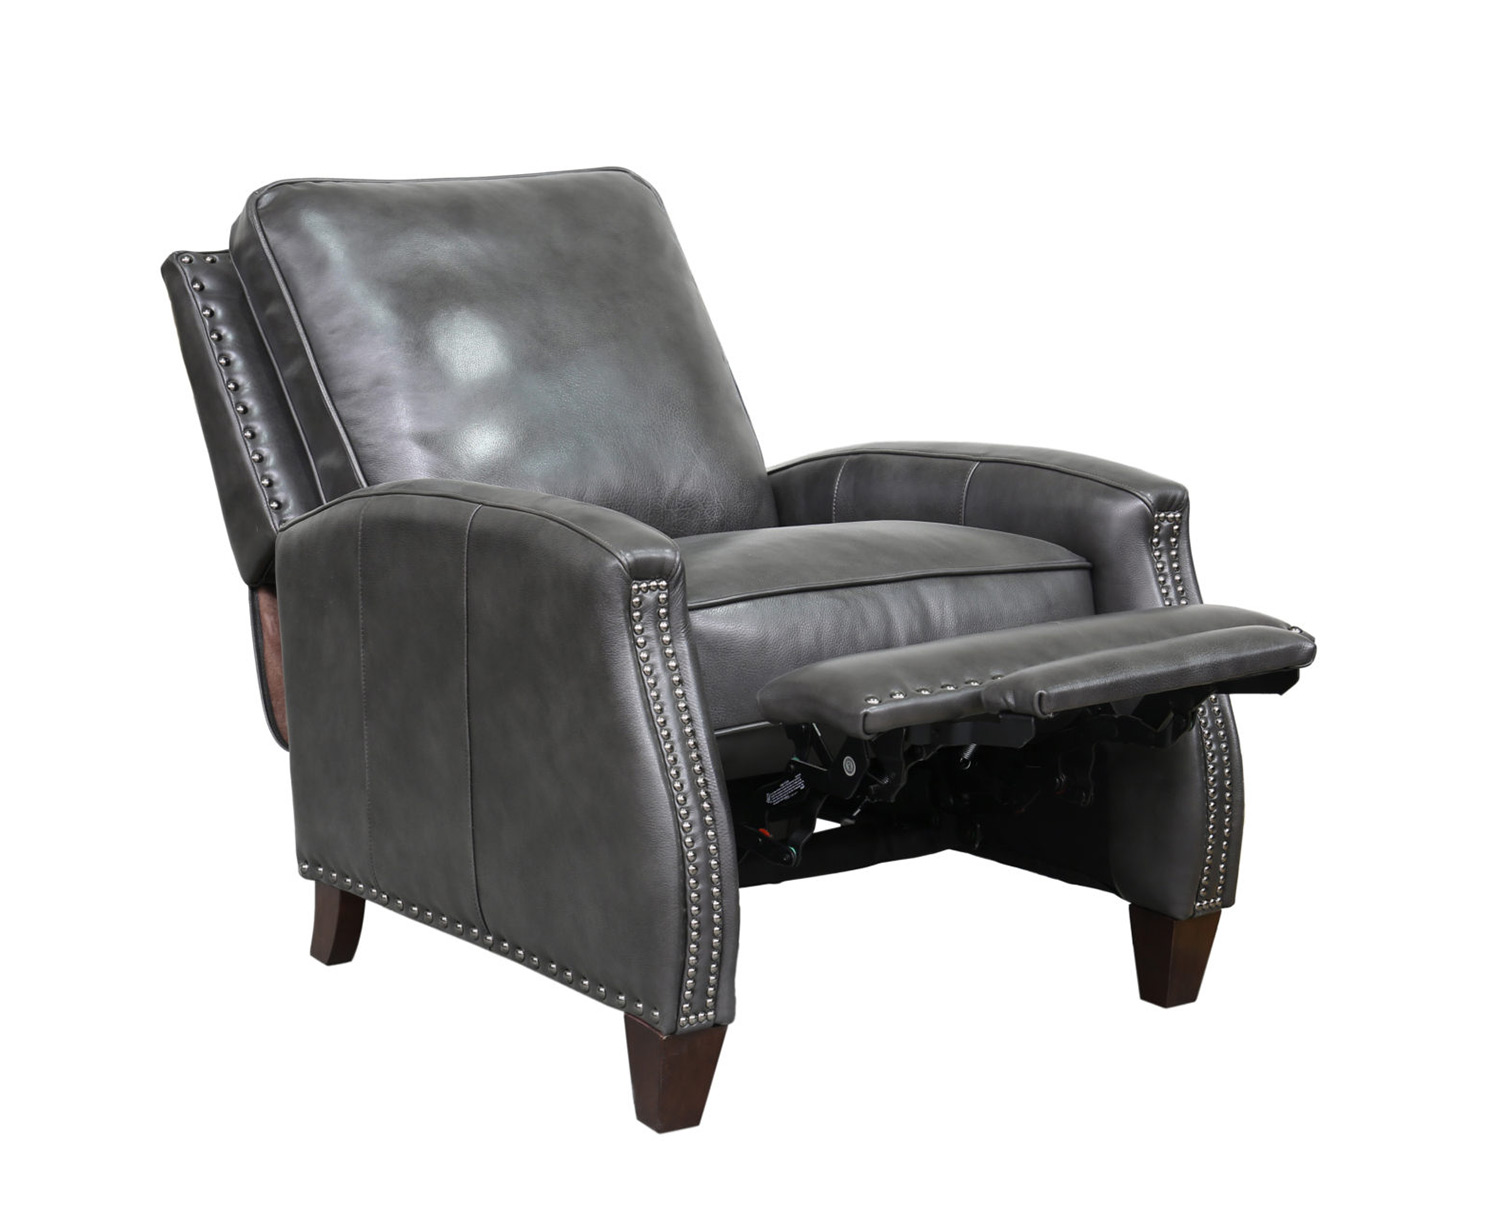 Barcalounger Melrose Recliner Chair - Wrenn Gray/all leather